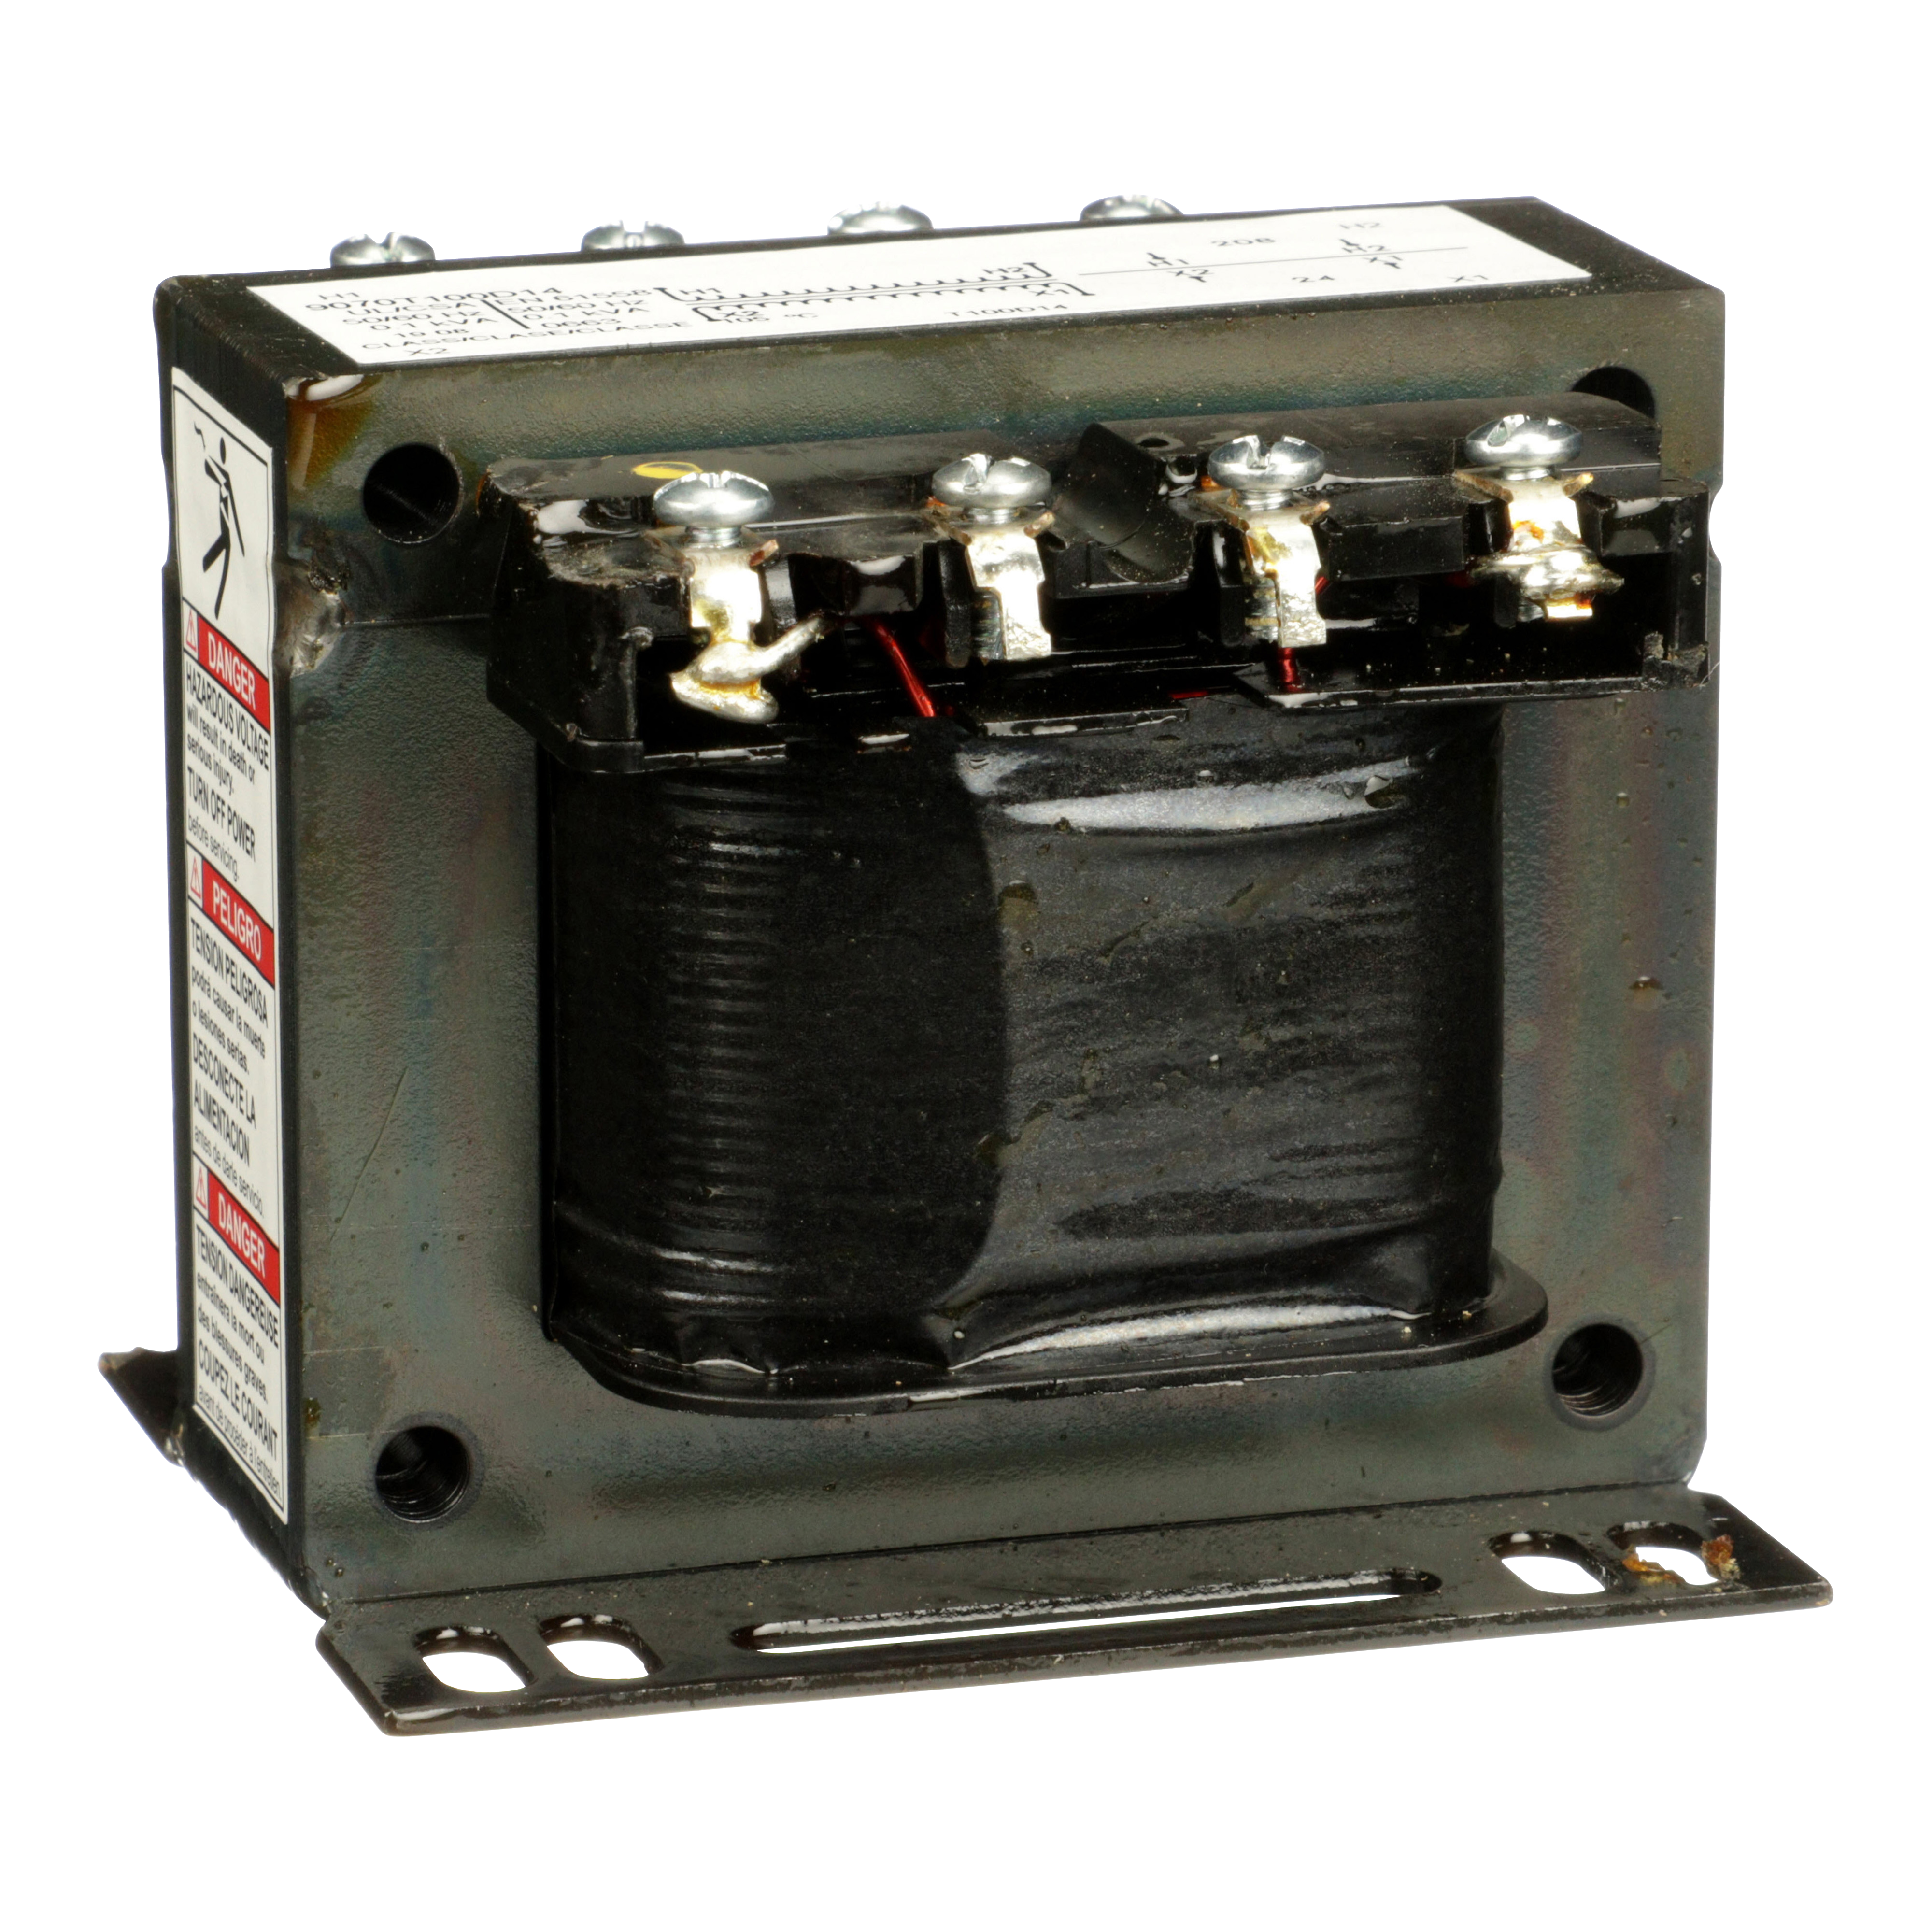 Industrial control transformer, Type T, 1 phase, 100VA, 208V primary, 24V secondary, 50/60Hz